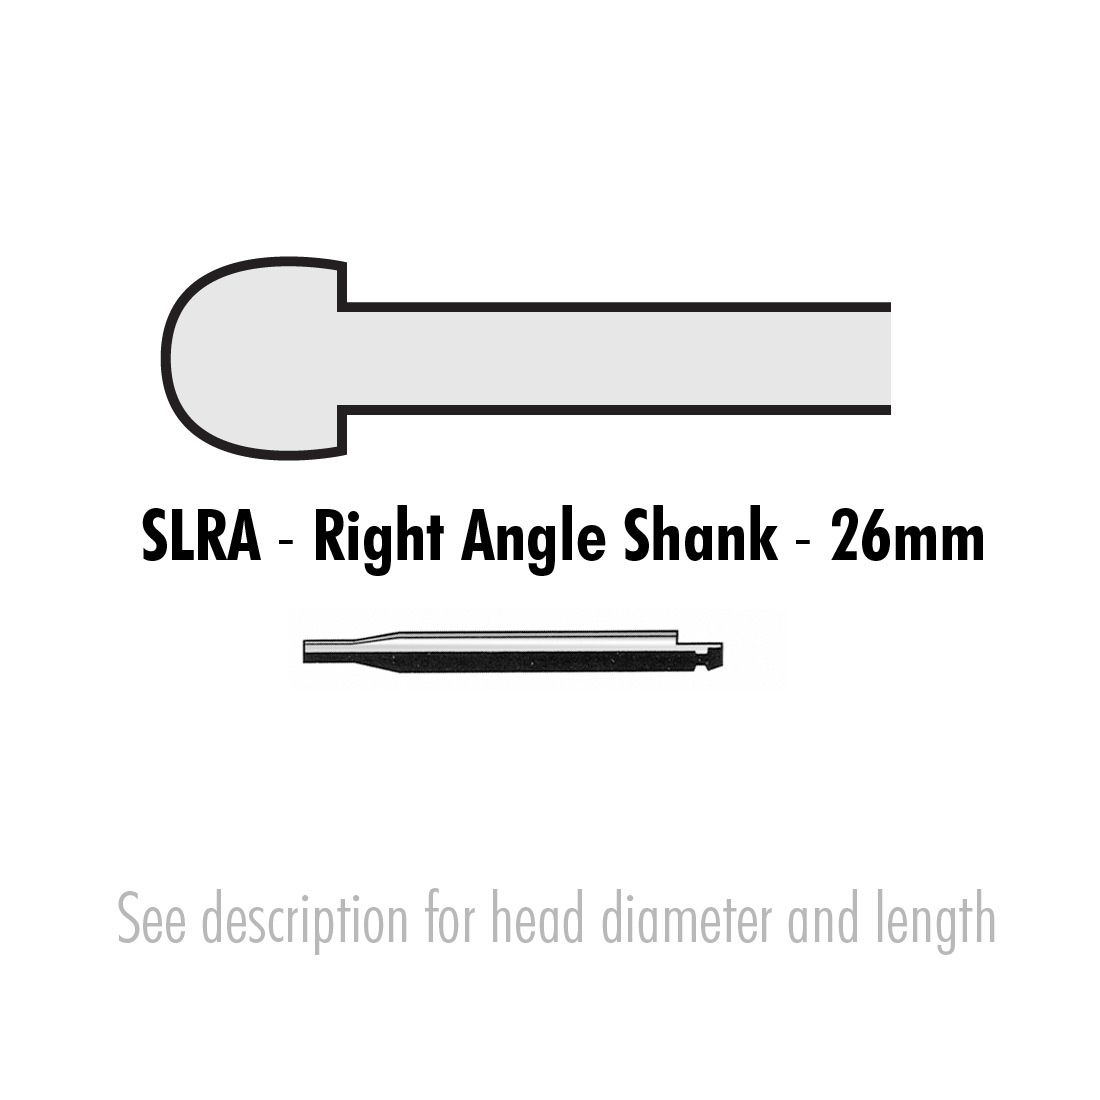 Carbide Bur, #8 Round, Right Angle Surgical Length (26mm), Non-Sterile - 5/Box